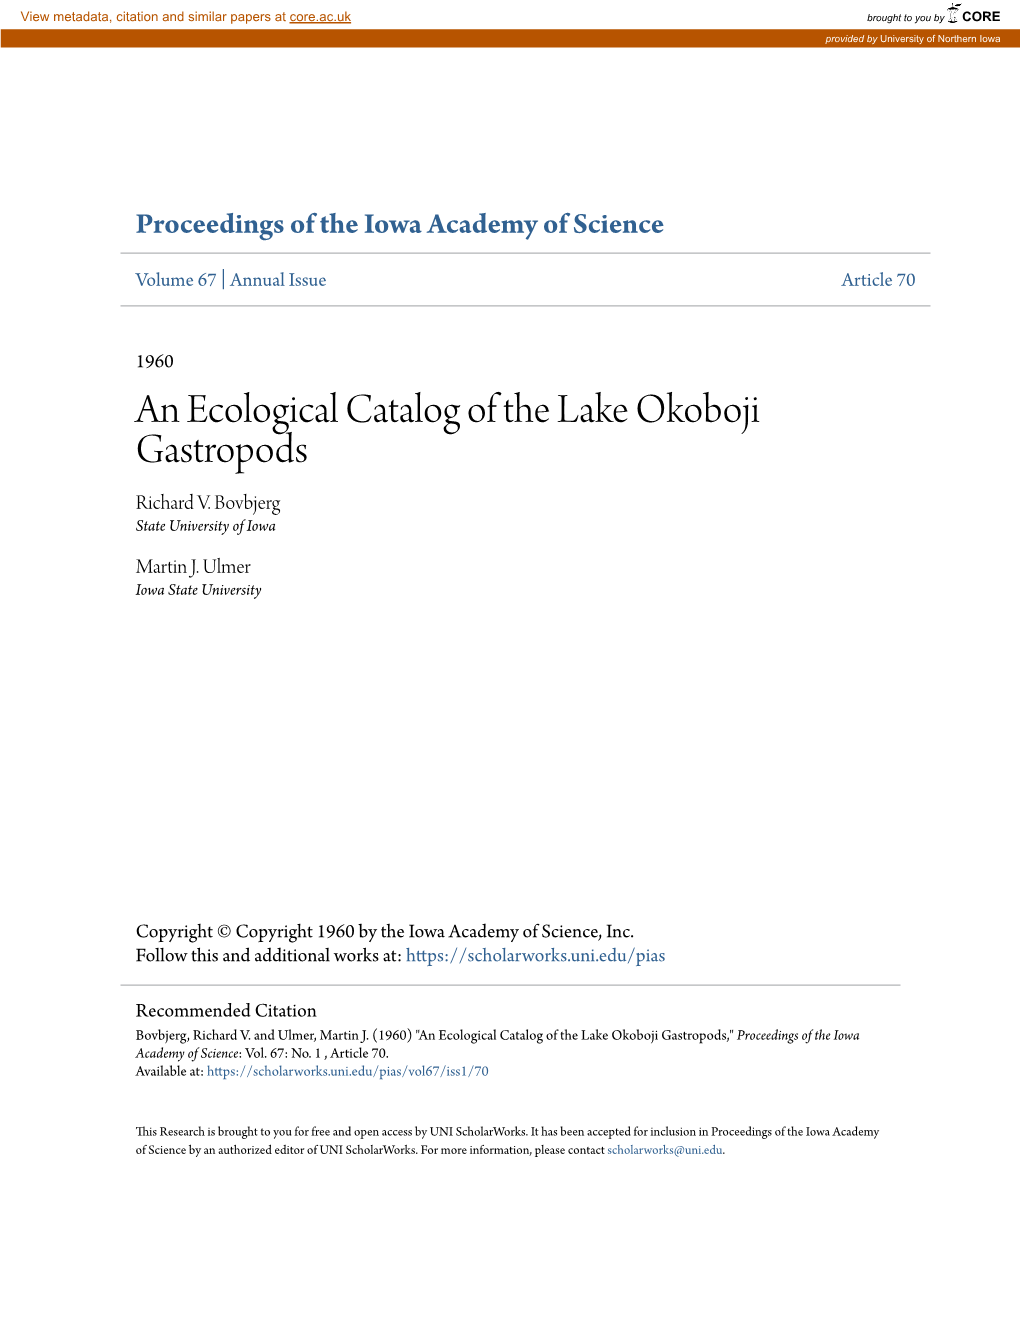 An Ecological Catalog of the Lake Okoboji Gastropods Richard V